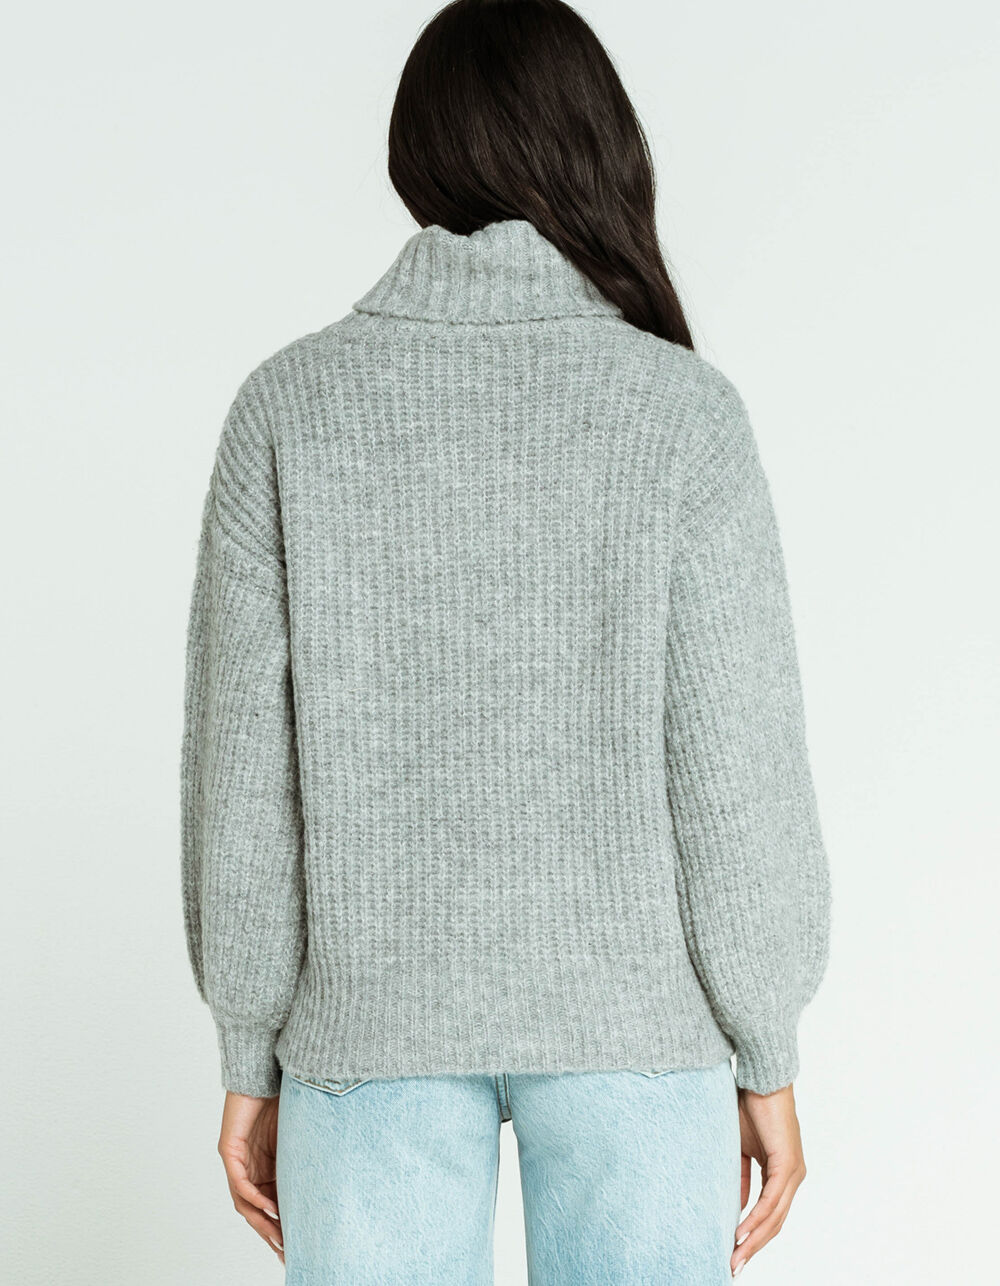 LUMIERE Transfer Stitch Turtleneck Womens Gray Sweater - GRAY